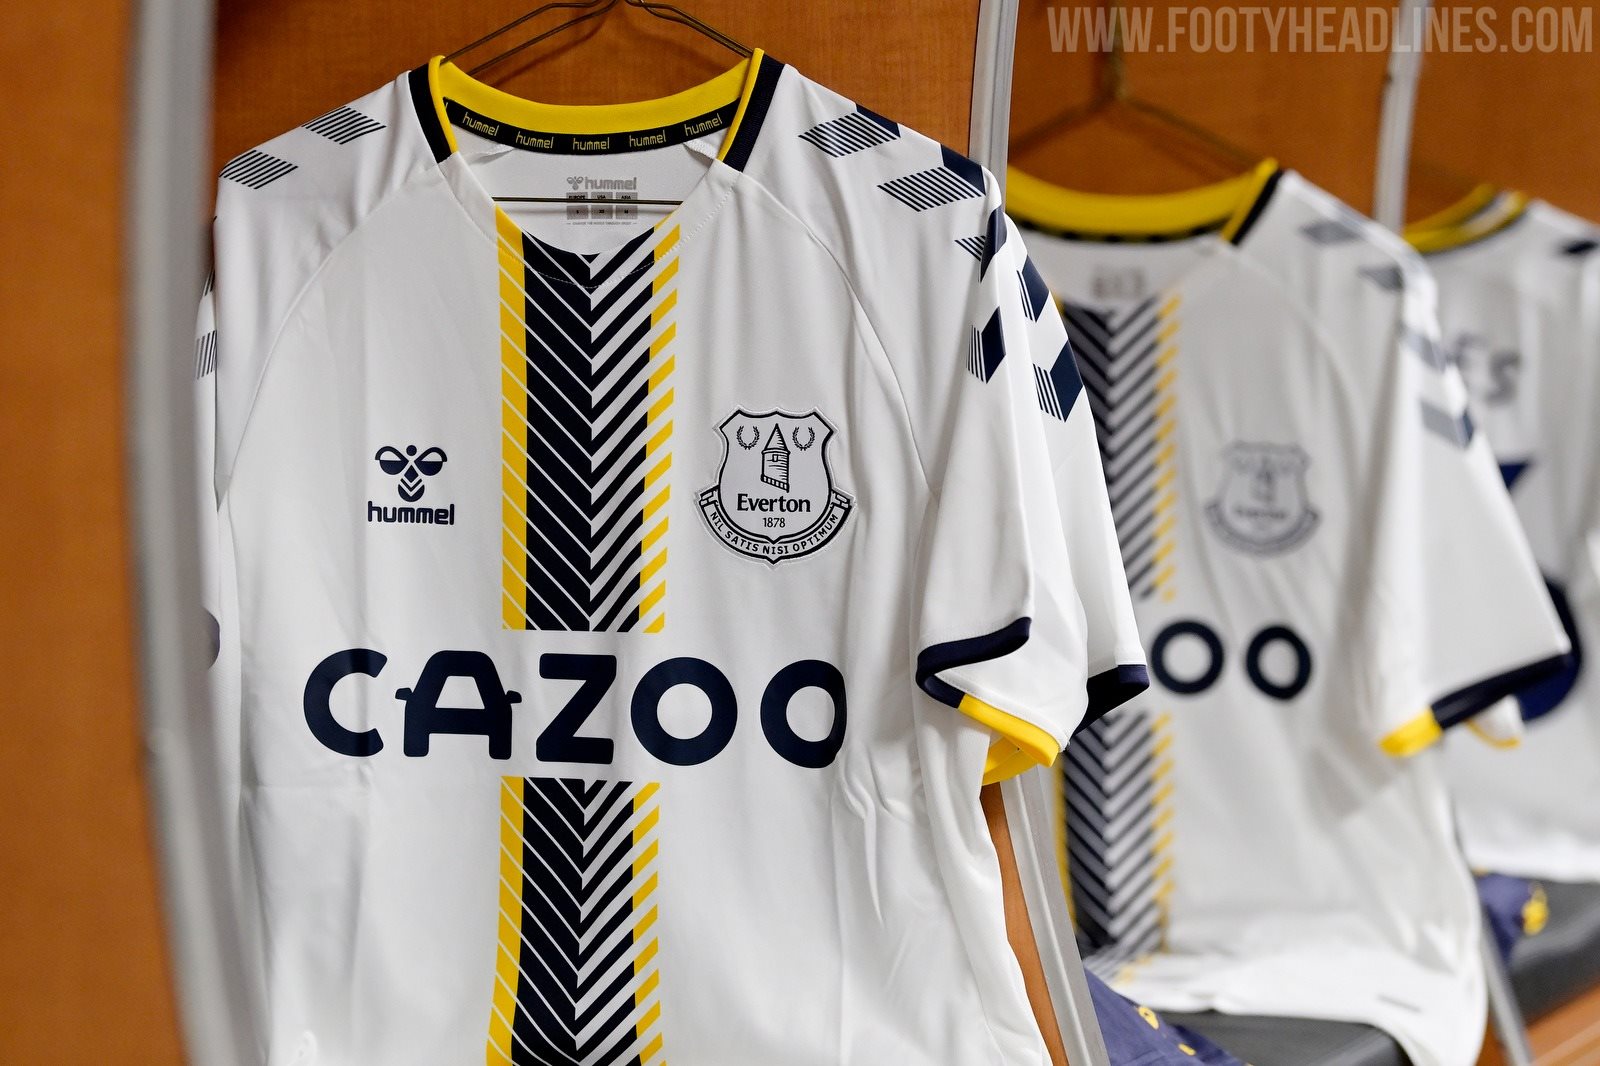 Everton 21-22 Home & Goalkeeper Kits Released - Footy Headlines